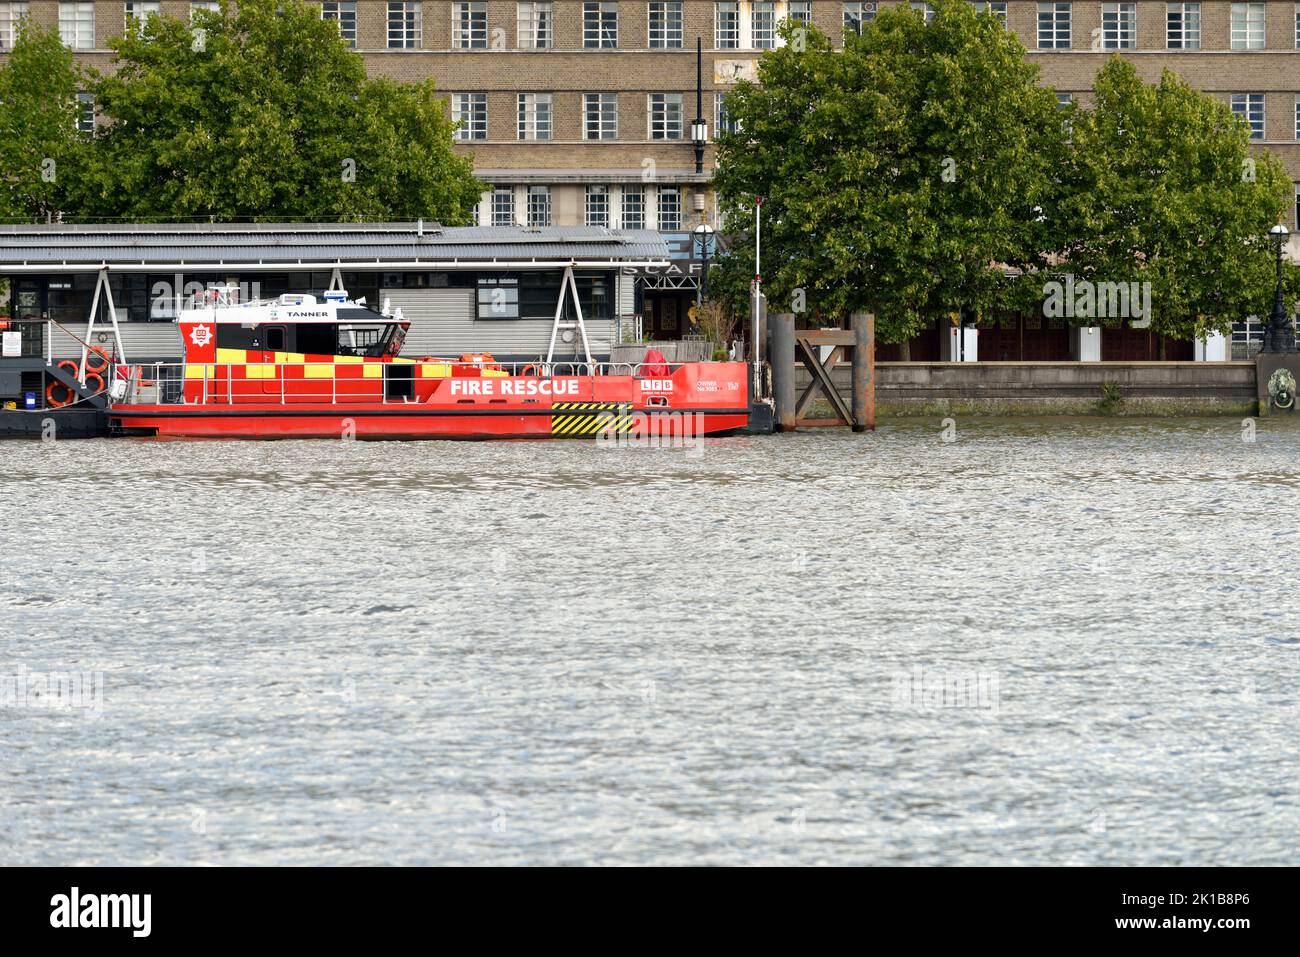 Fireboat moored at the Lambeth River Fire Station, Albert Embankment, Lambeth, London, United Kingdom Stock Photo